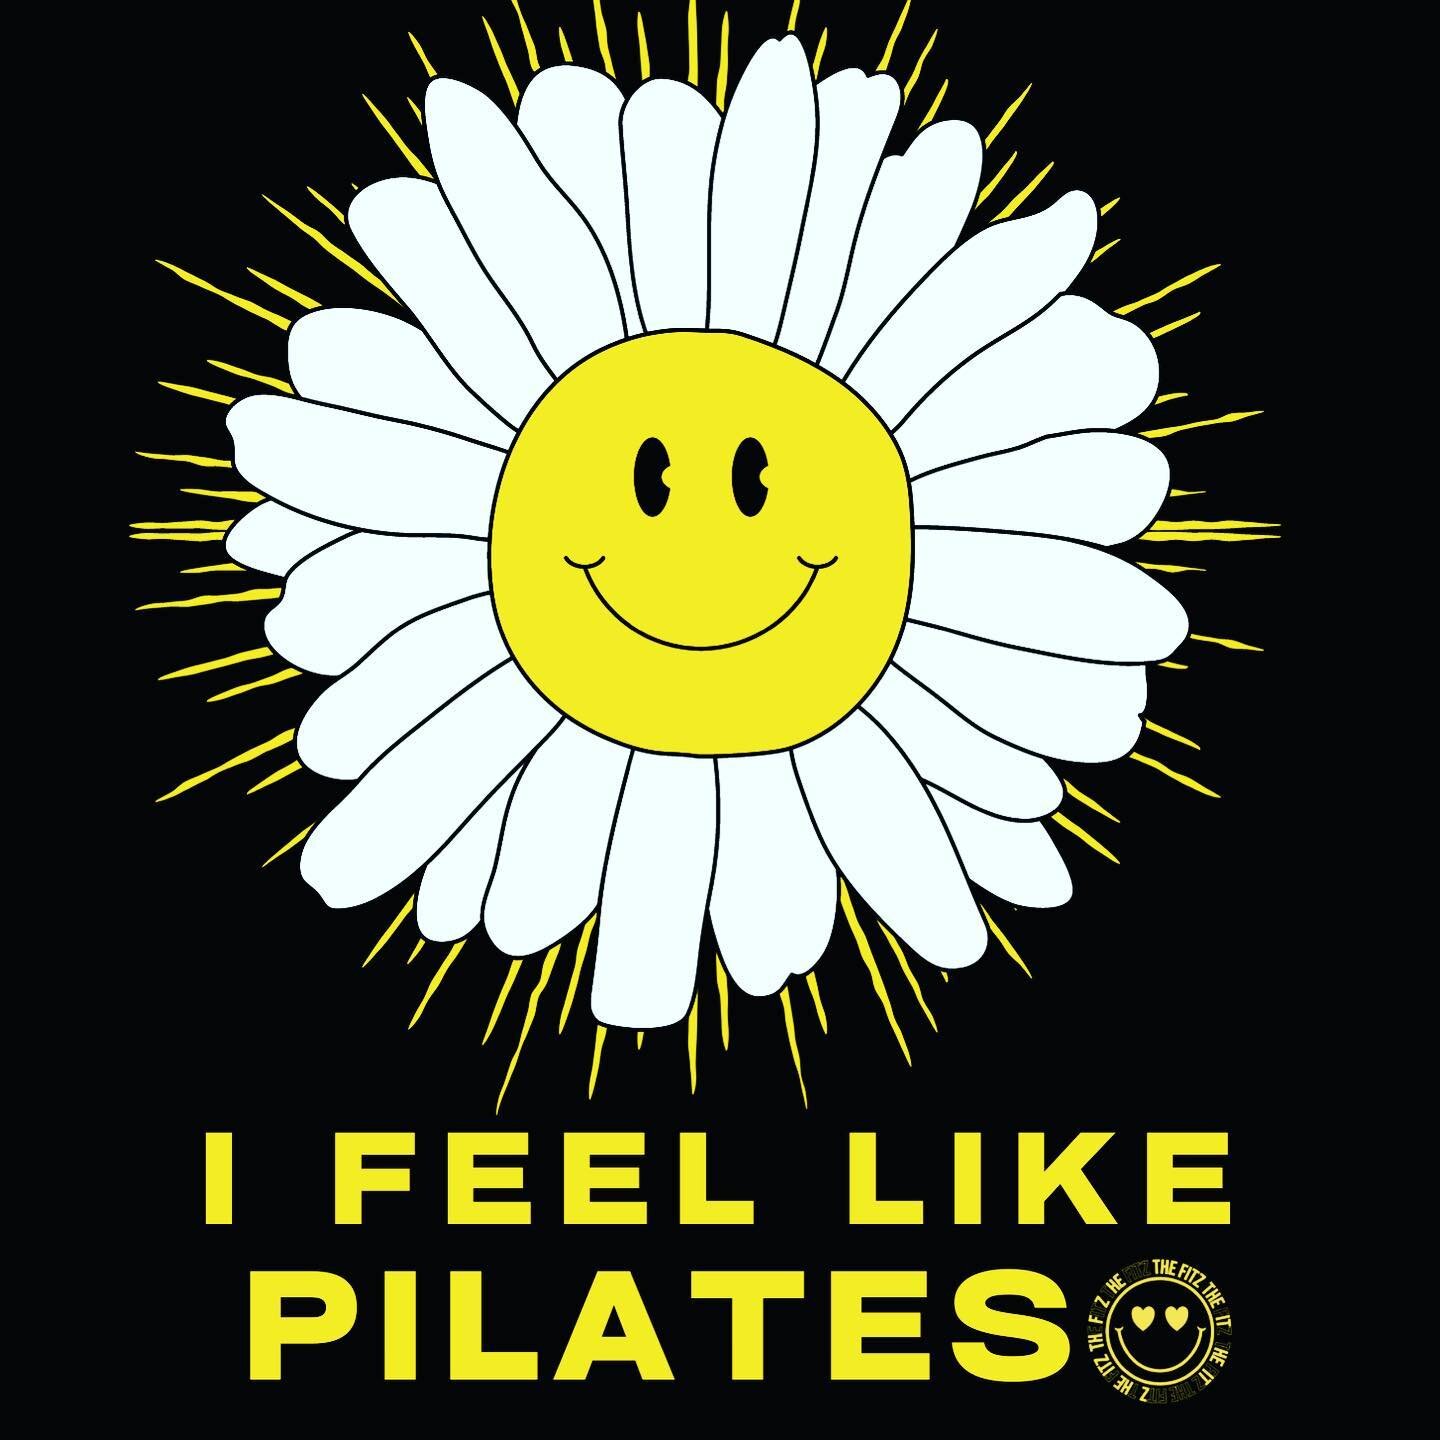 You know that feeling?? Ahhhh it feels so gooooooood. #ifeellikepilates #pilatesmakesyouhappy #thefitzhsv #workouthuntsville